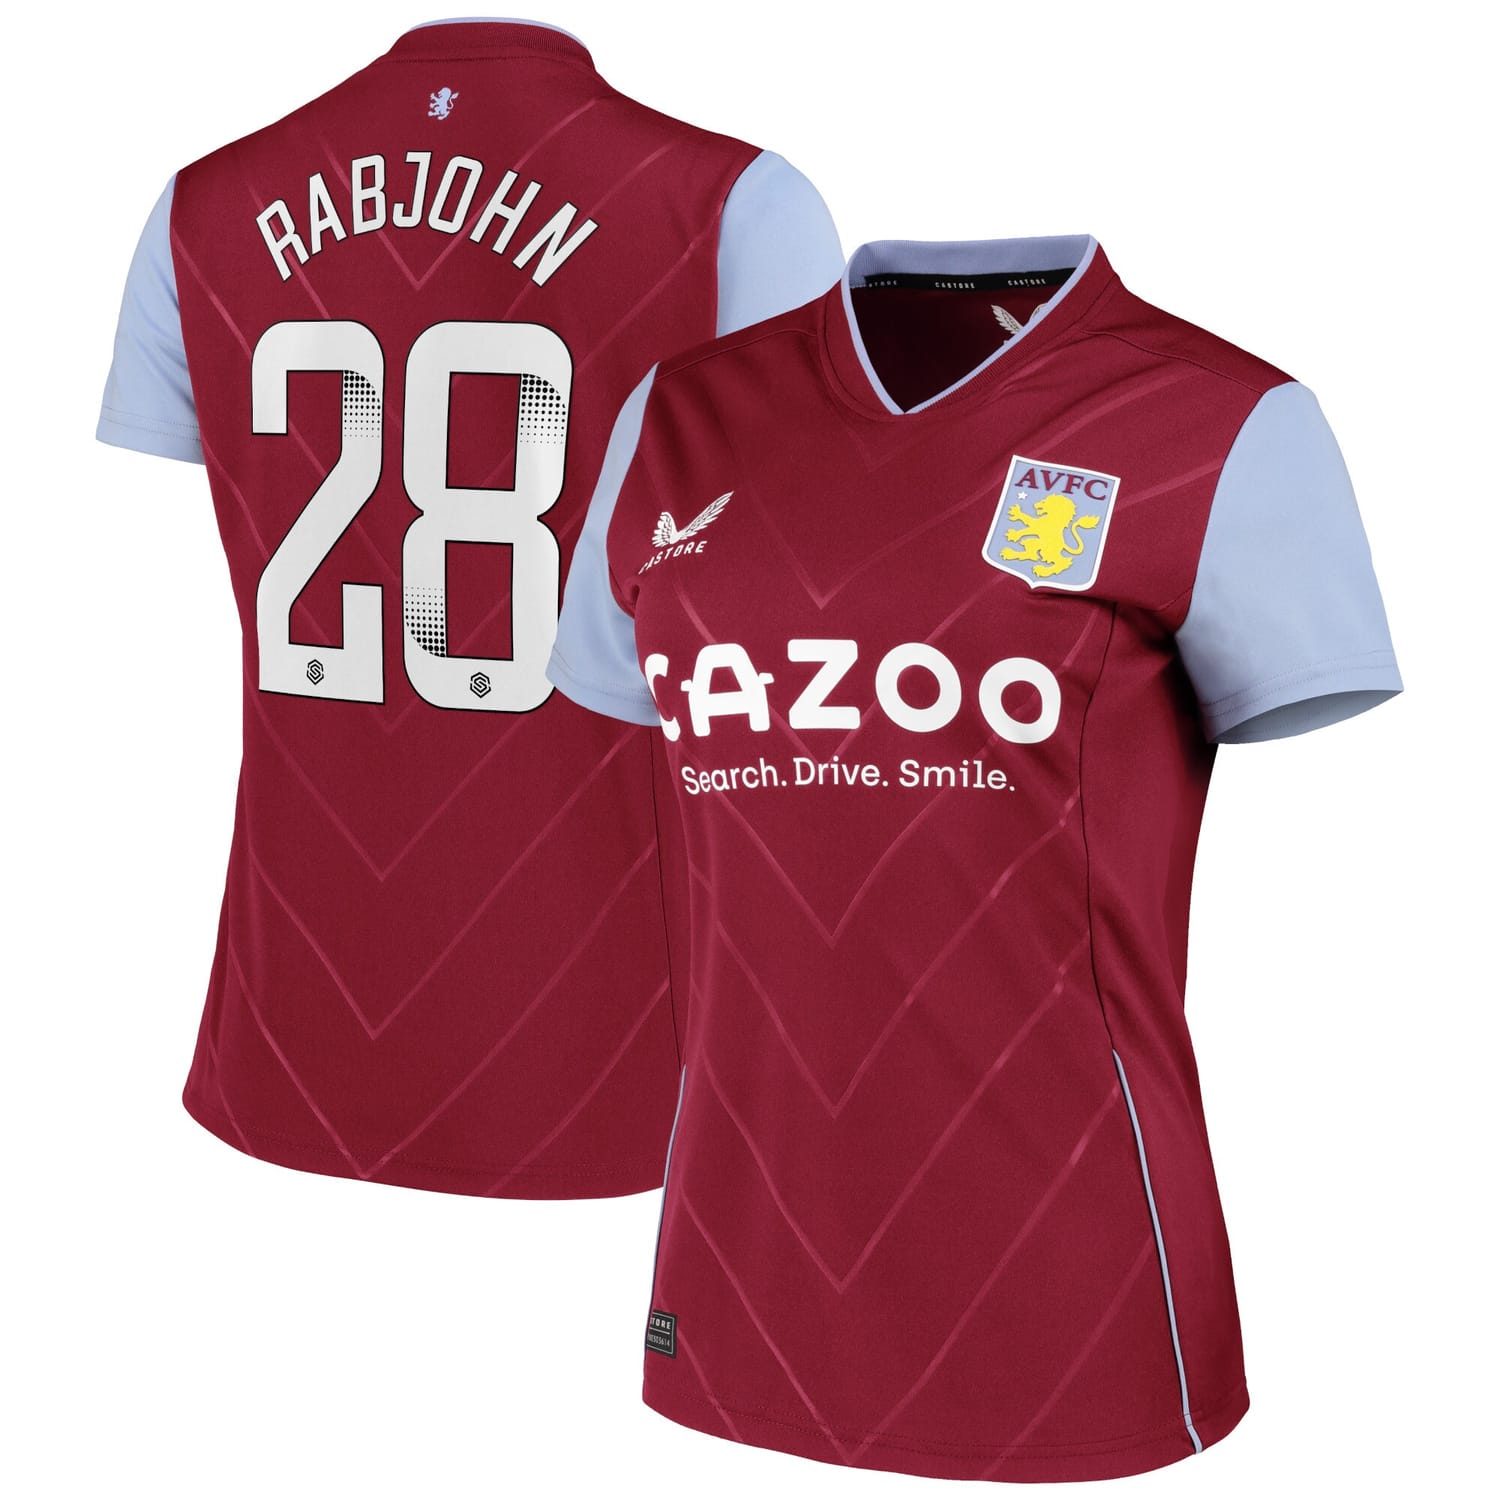 Premier League Aston Villa Home Jersey Shirt 2022-23 player Evie Rabjohn 28 printing for Women